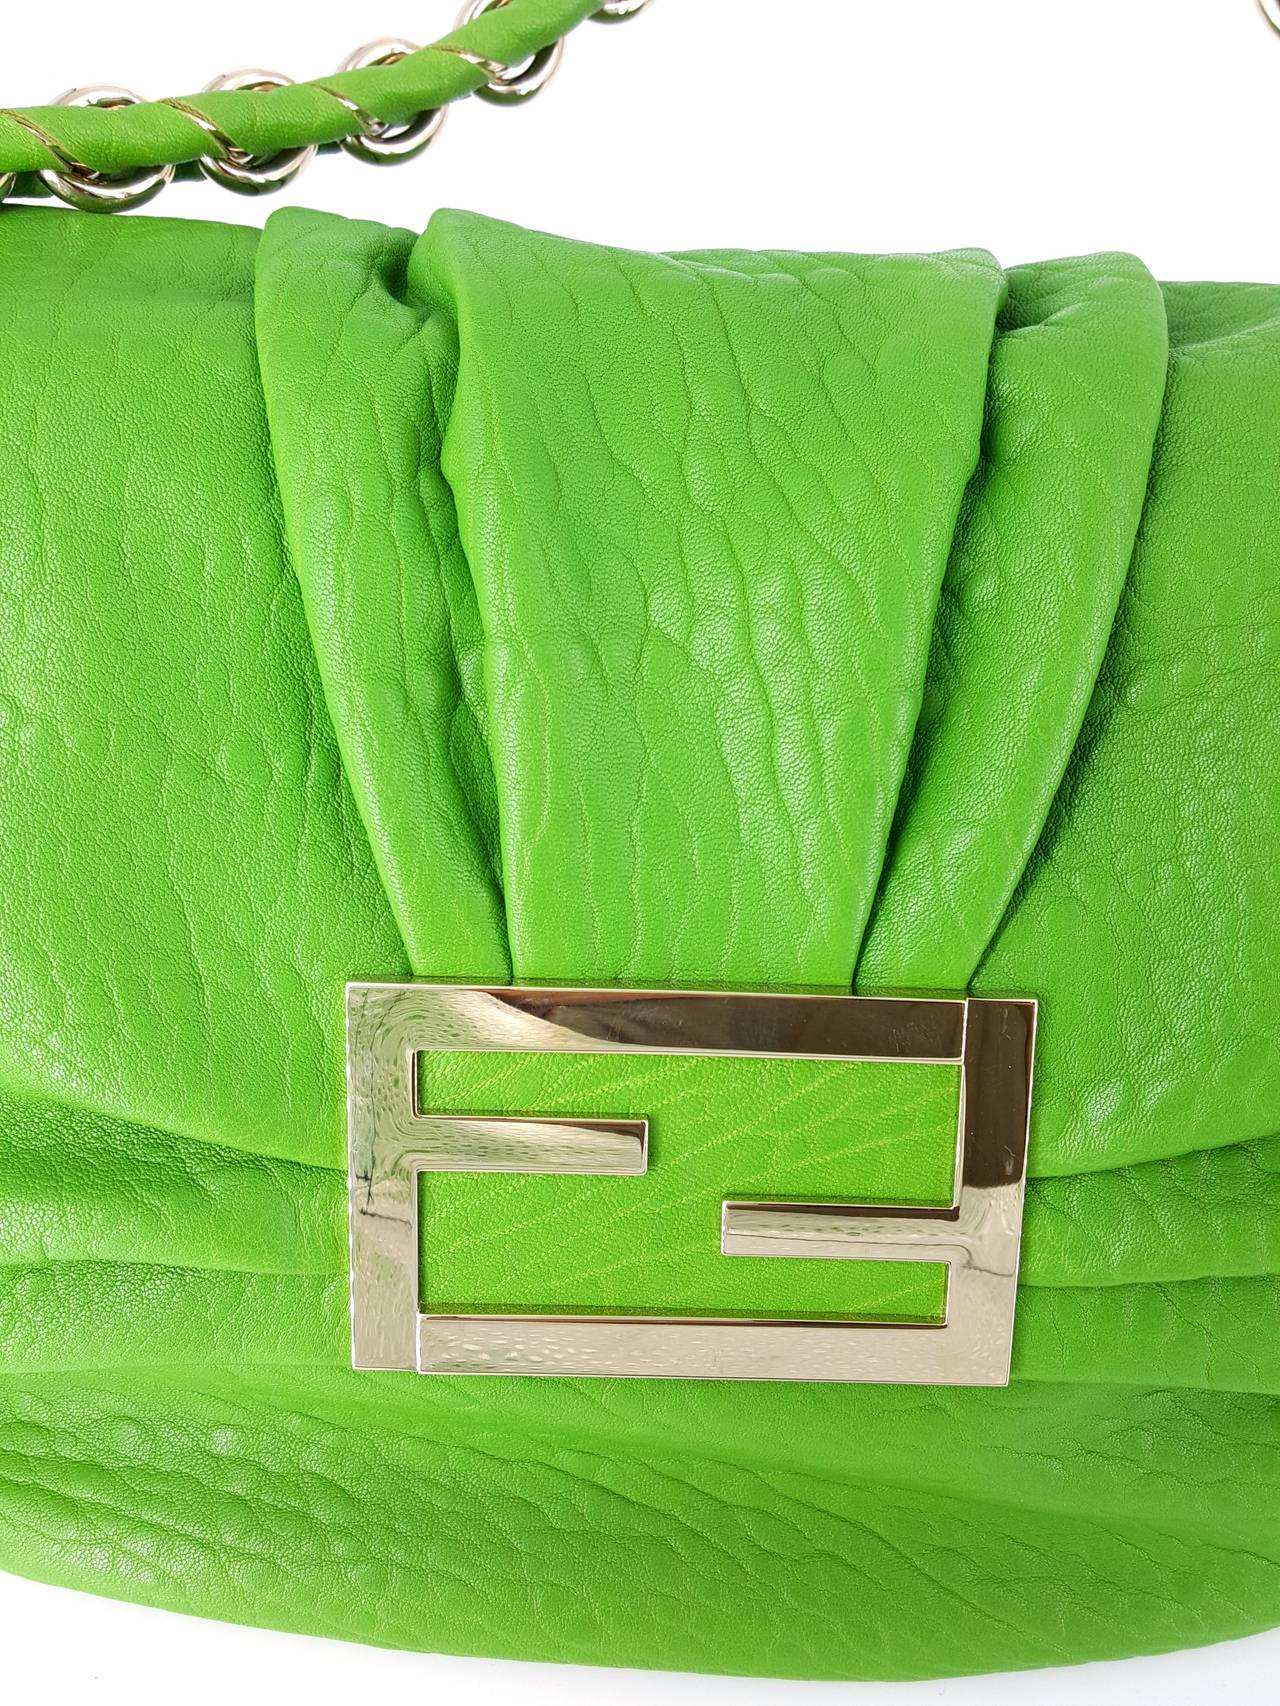 coach kelly green handbag